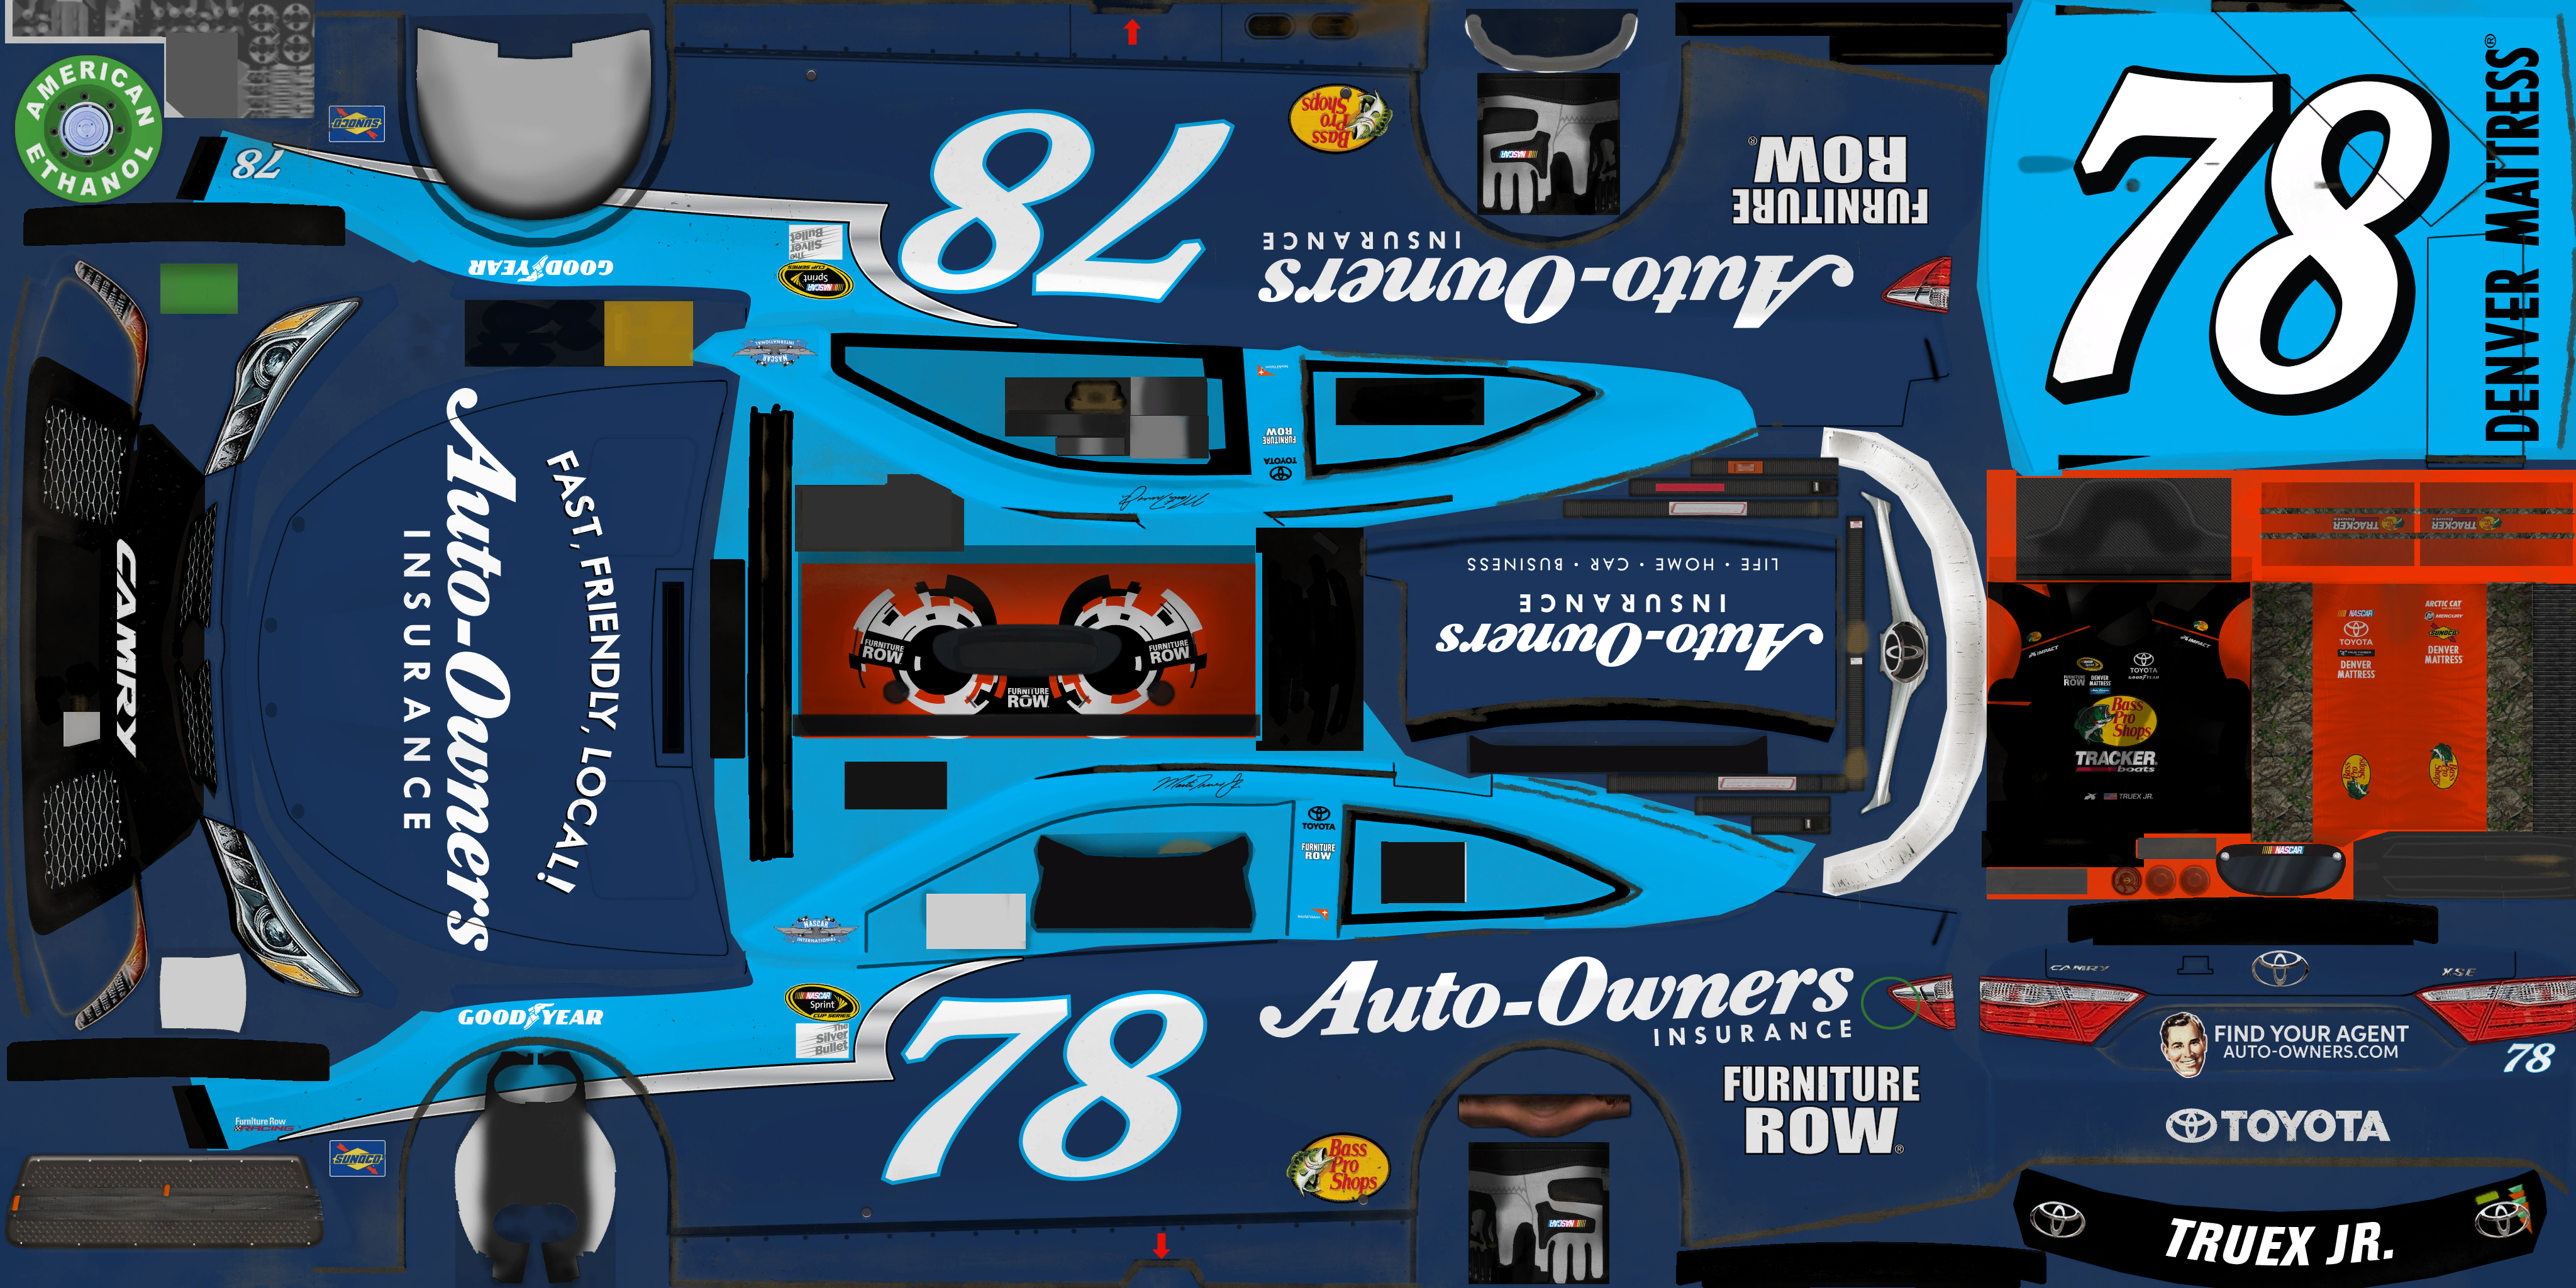 NASCAR Heat Evolution - #78 Martin Truex Jr. (Auto-Owners Insurance Throwback)